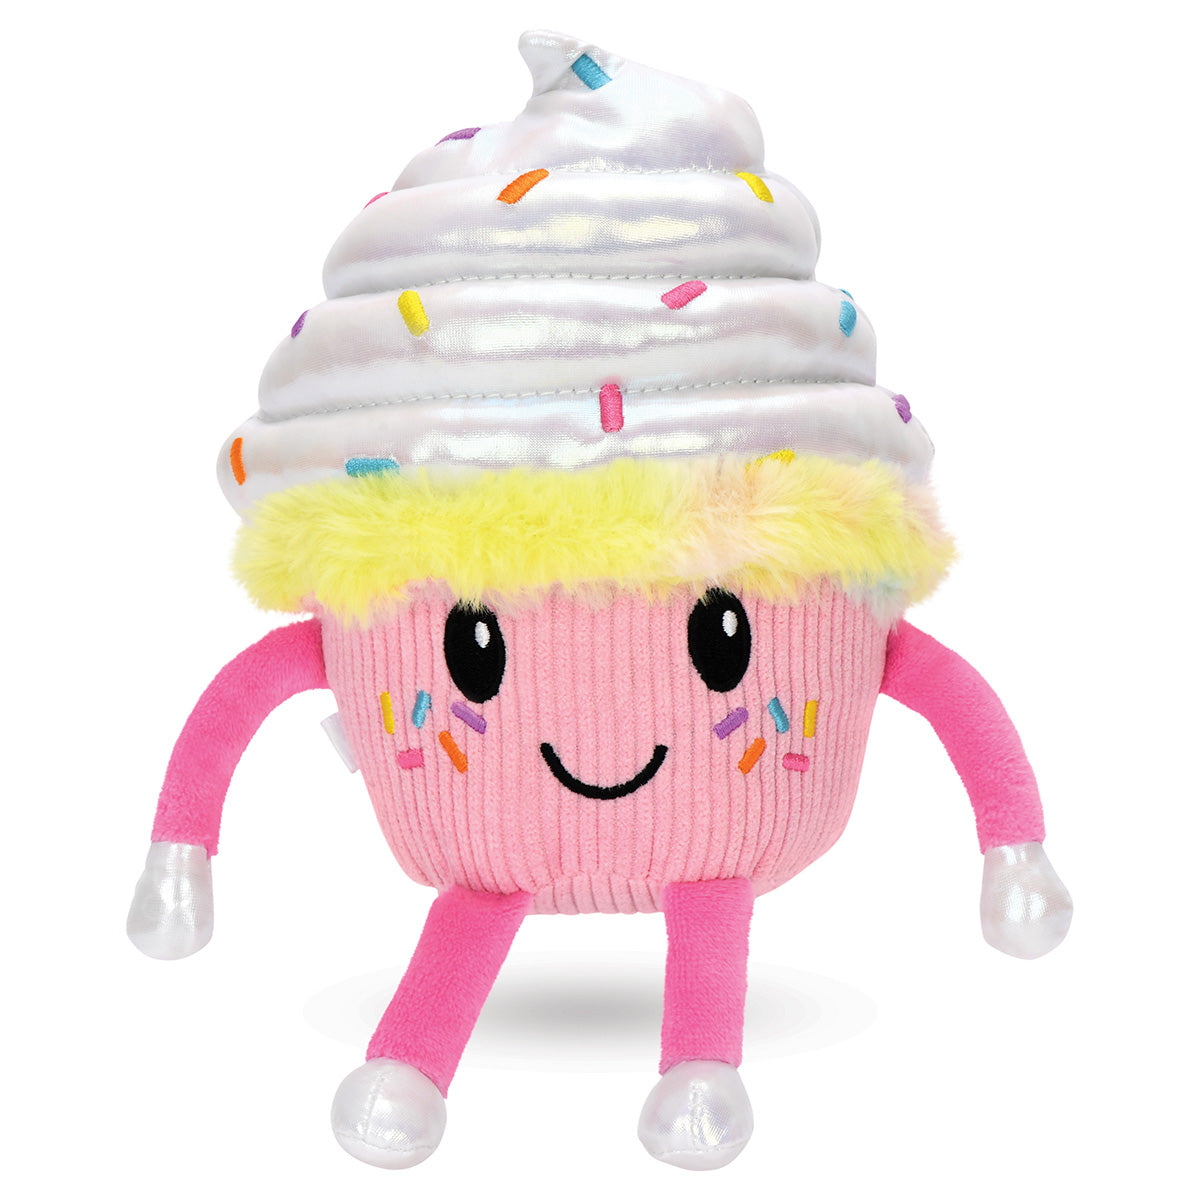 Iscrem Sprinkles The Cupcake Mini Plush